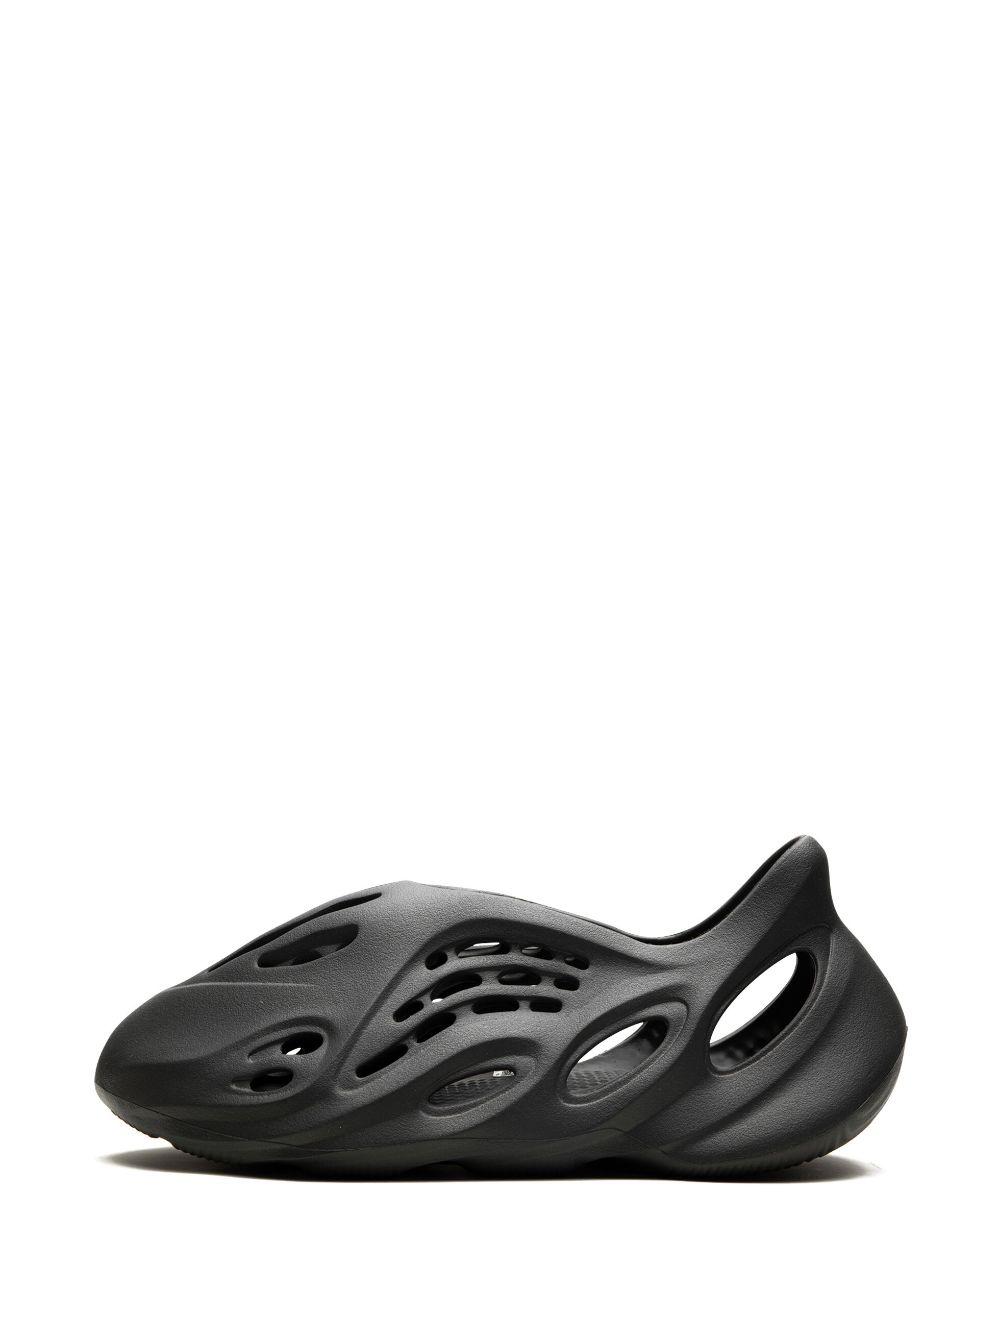 adidas Yeezy Foam Runner "carbon" Sandals in Black for Men   Lyst